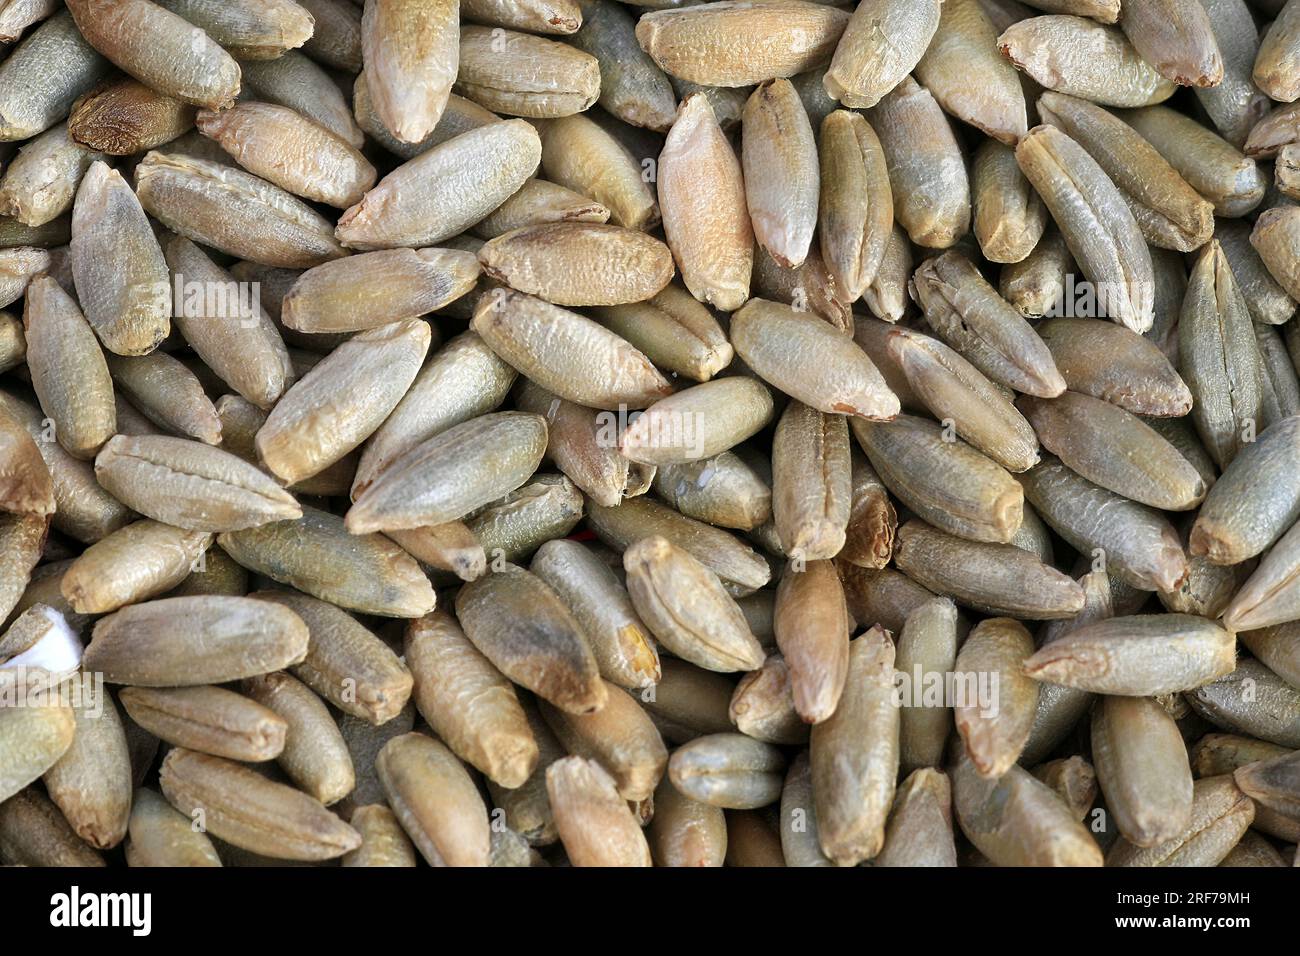 Saat-Roggen, Roggen (Secale cereale), Koerner | cultivated rye (Secale cereale), grains Stock Photo